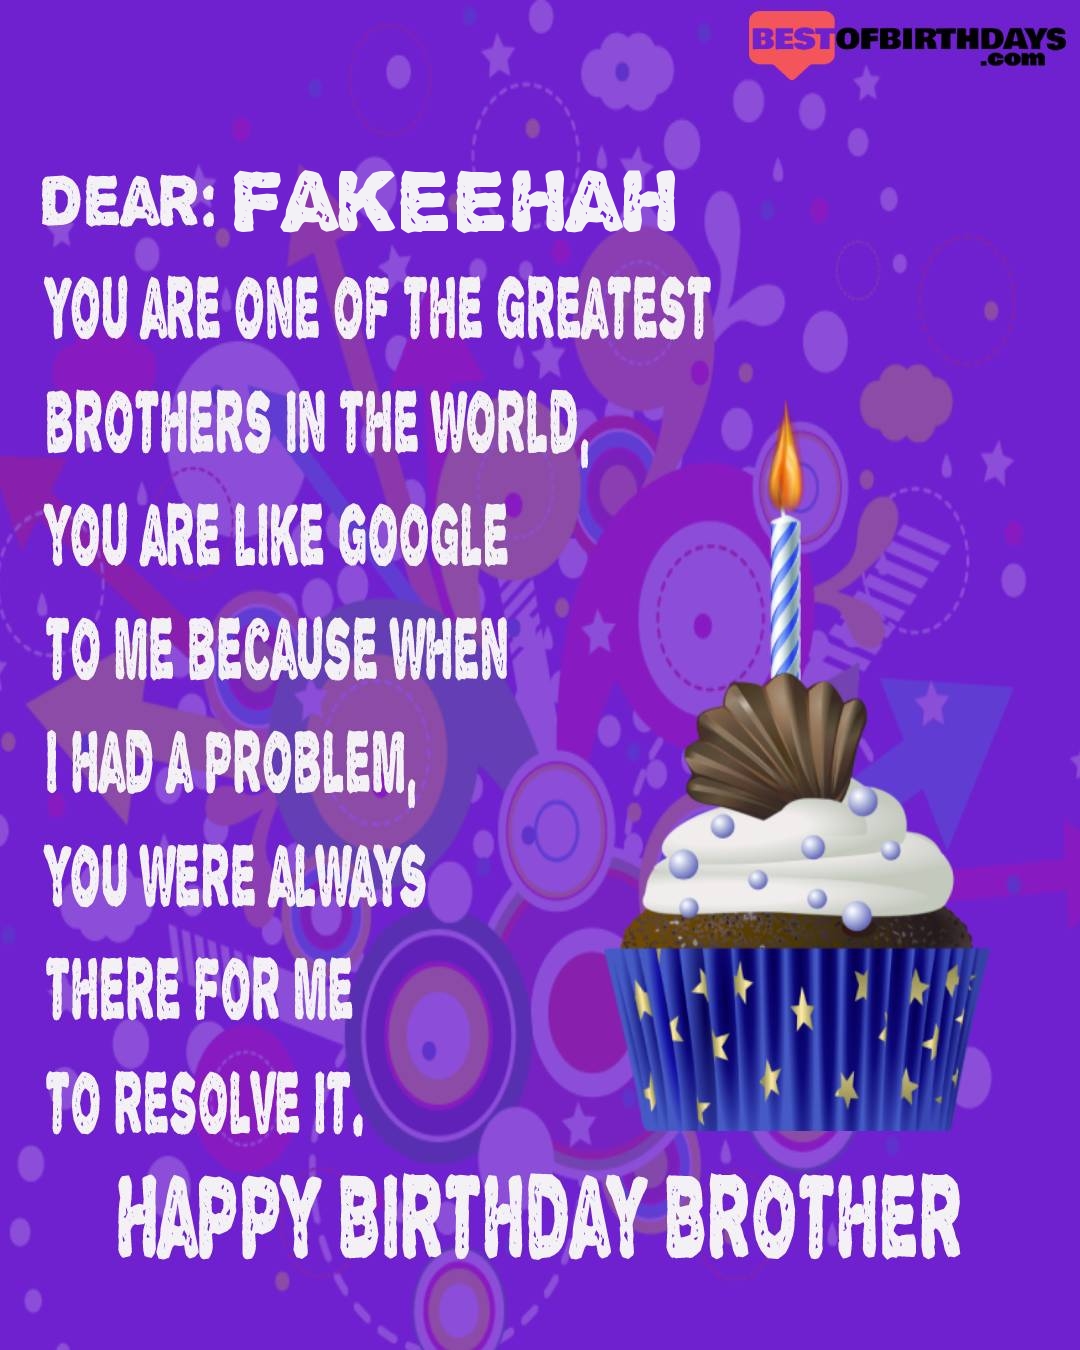 Happy birthday fakeehah bhai brother bro